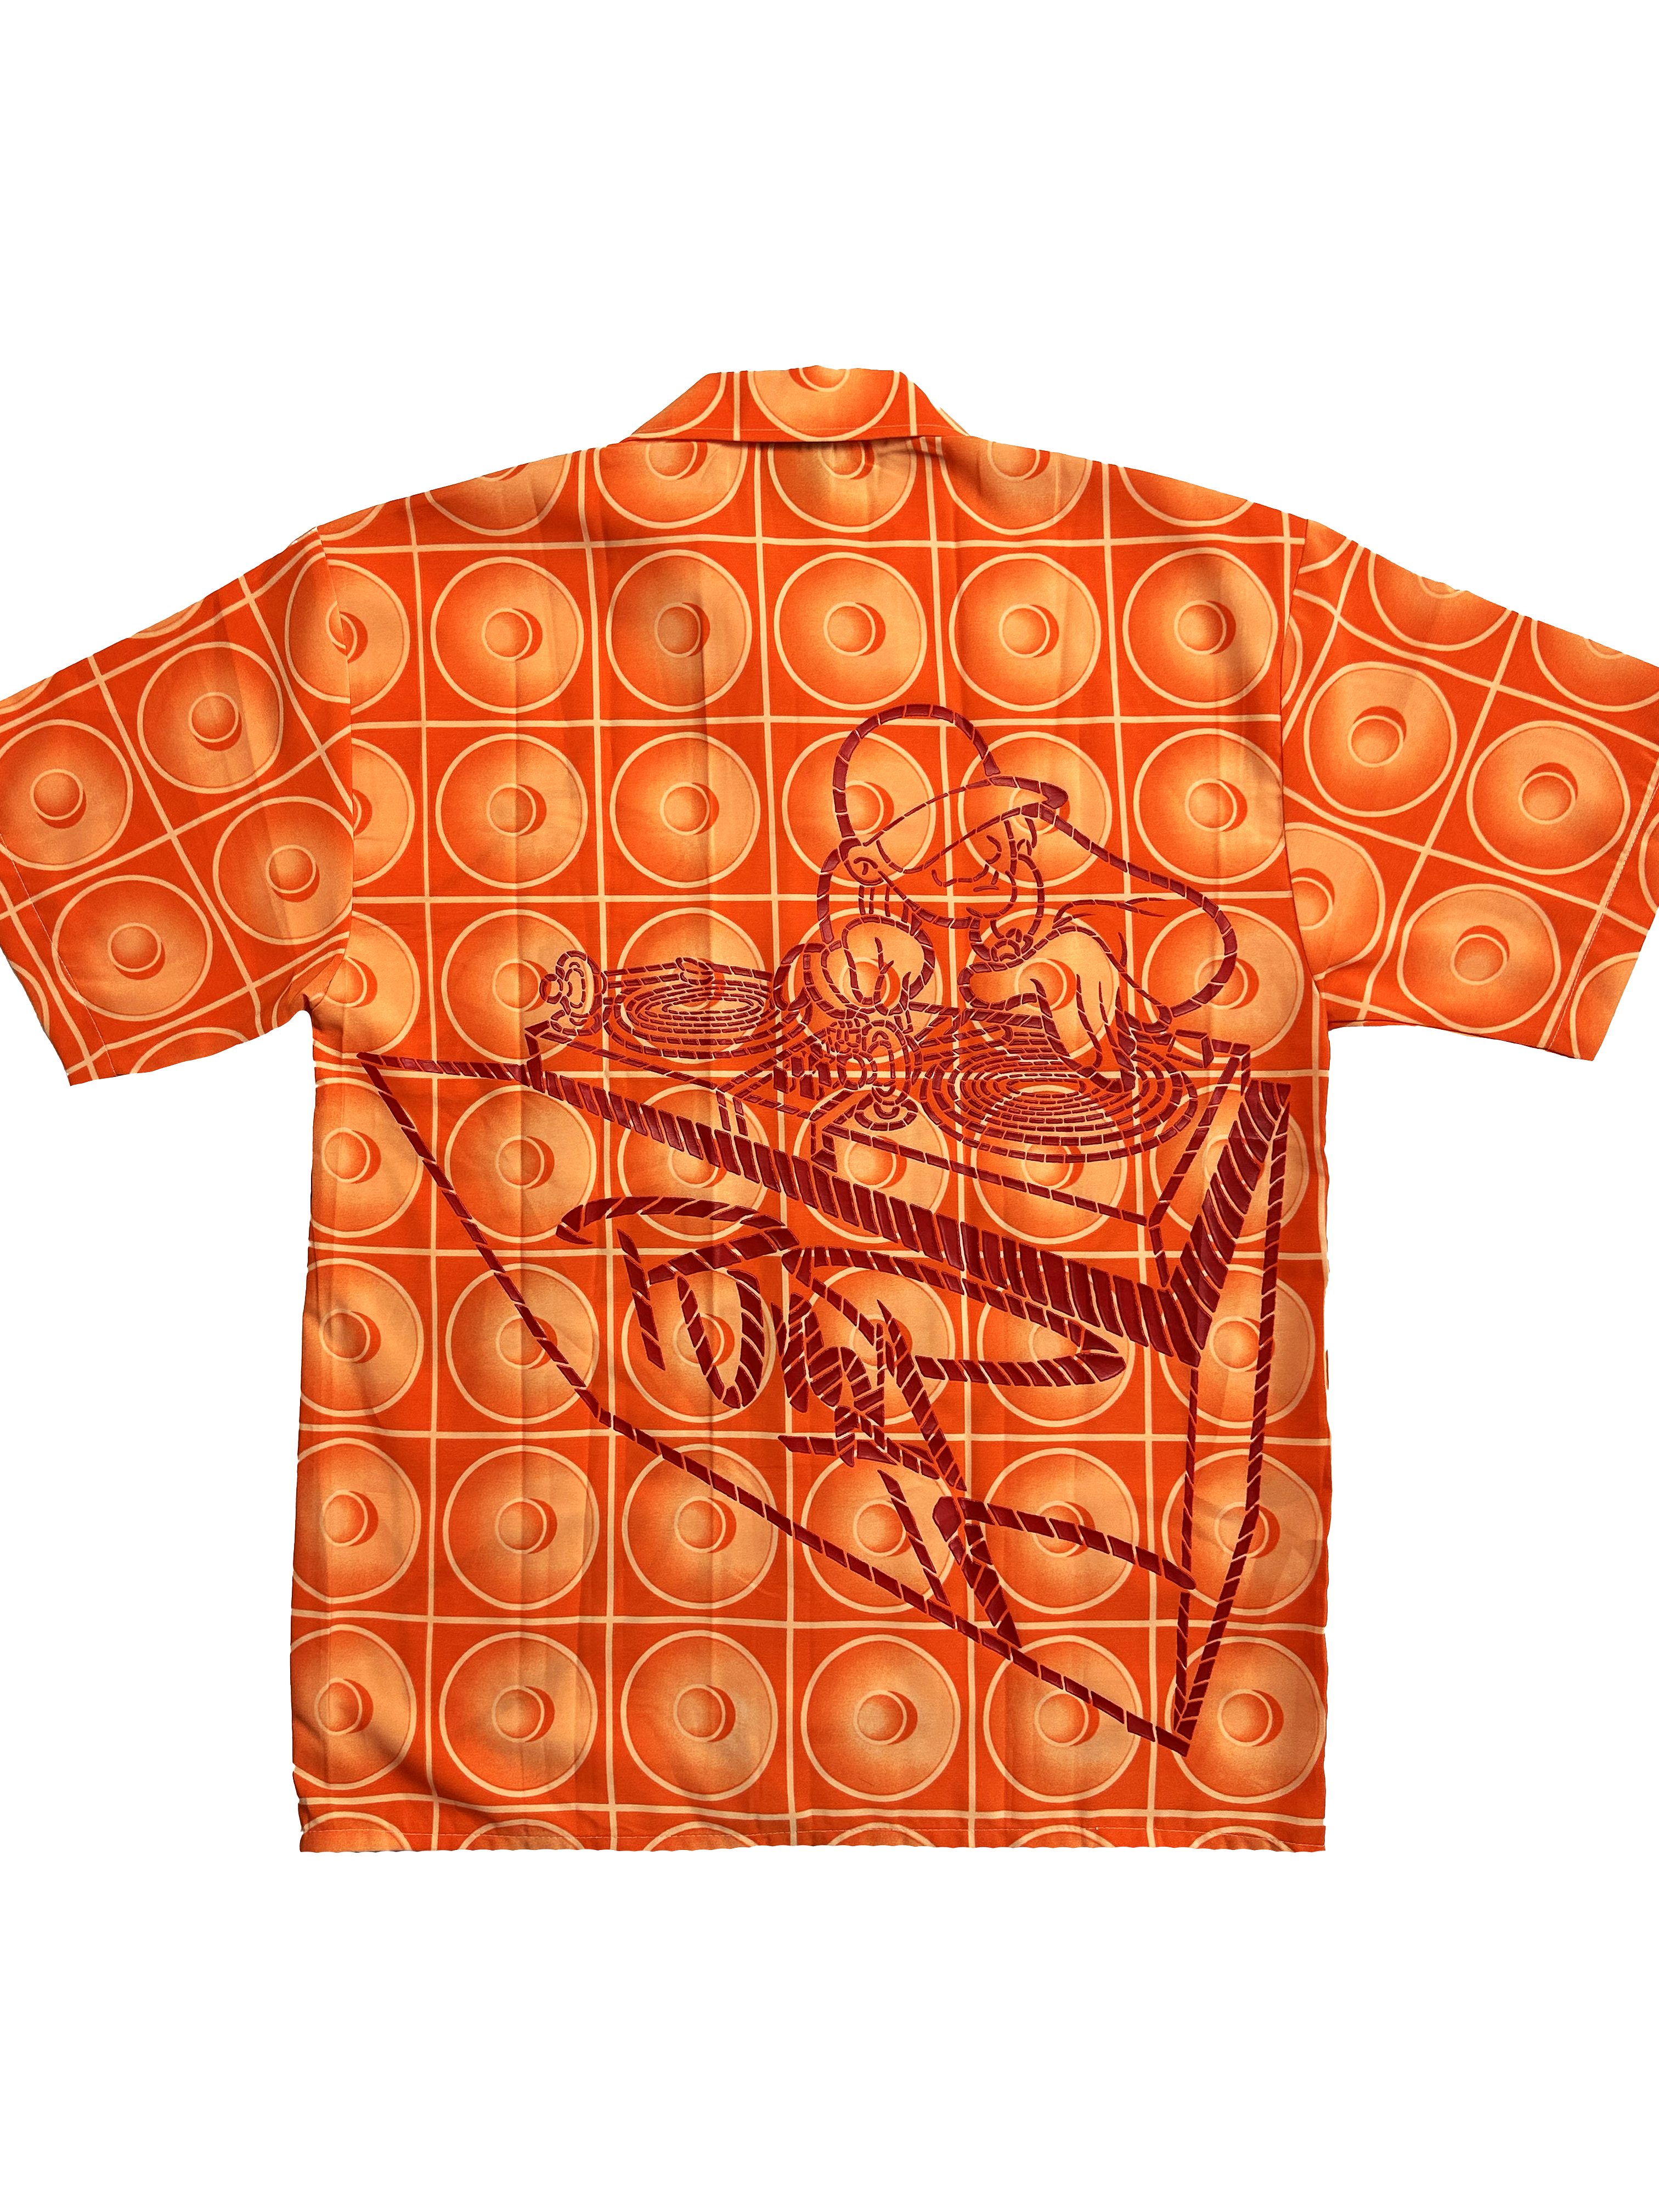 South Pole Print Shirt 90's